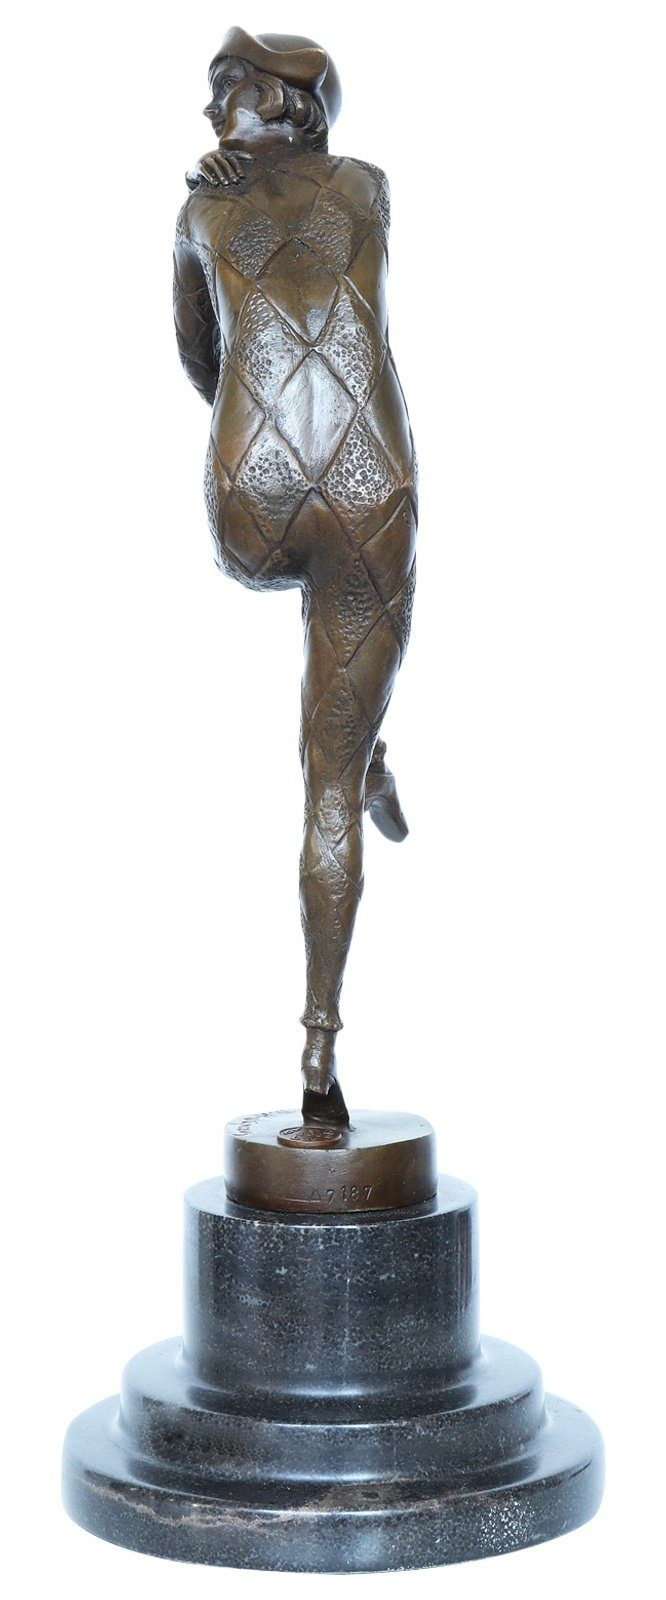 Aubaho Skulptur Bronzeskulptur Harlekin Antik-Stil Figur nach Skulptur Chiparus Bronze